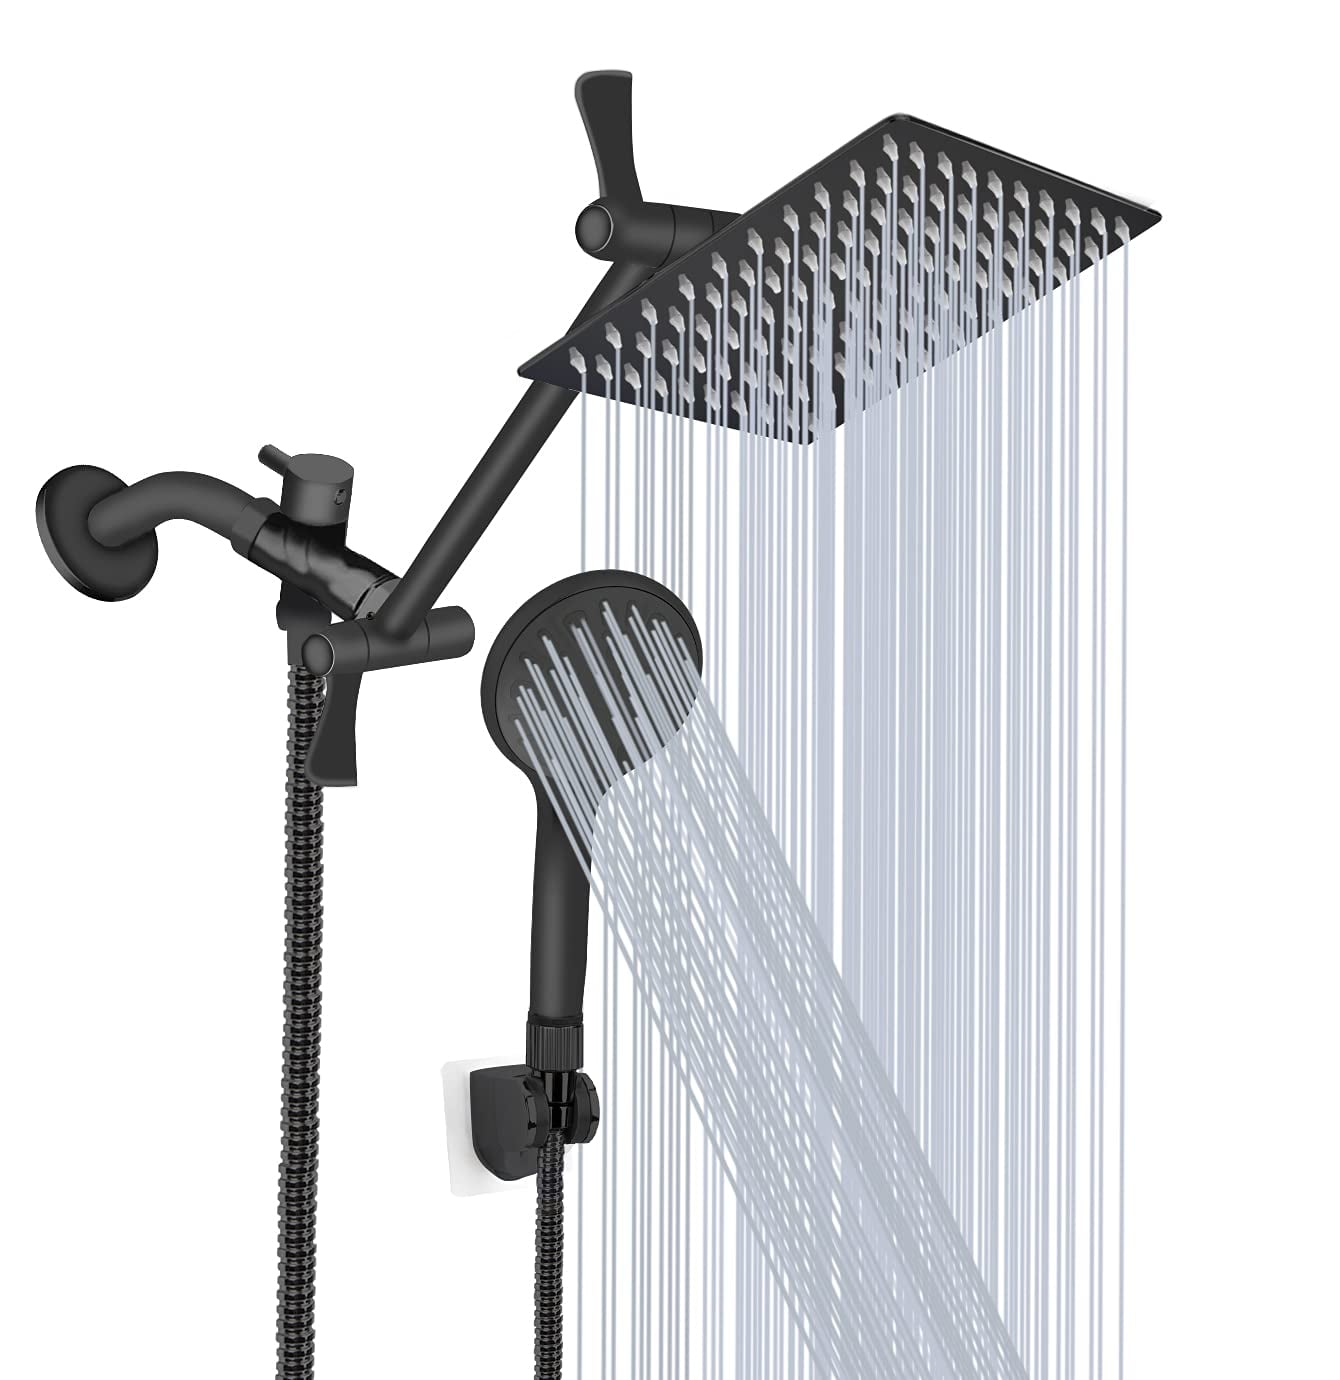 ecooe Stainless Steel Shower Wiper Extended 31 cm Black Shower